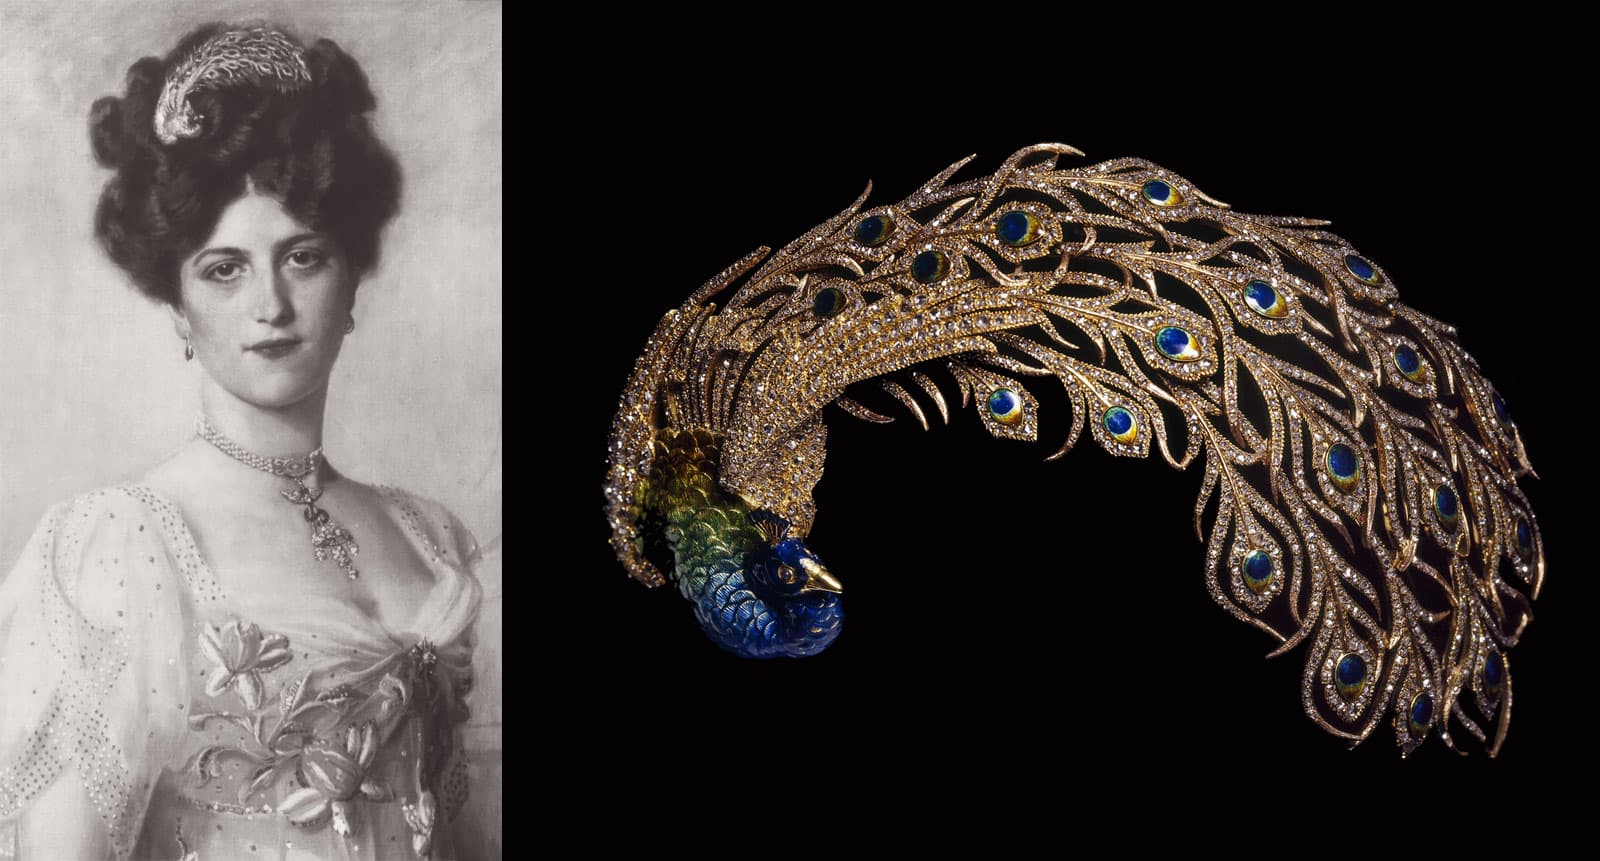 Anita Delgado wearing 'Paon Royal' brooch with enamel and diamonds created by Mellerio Dits Meller